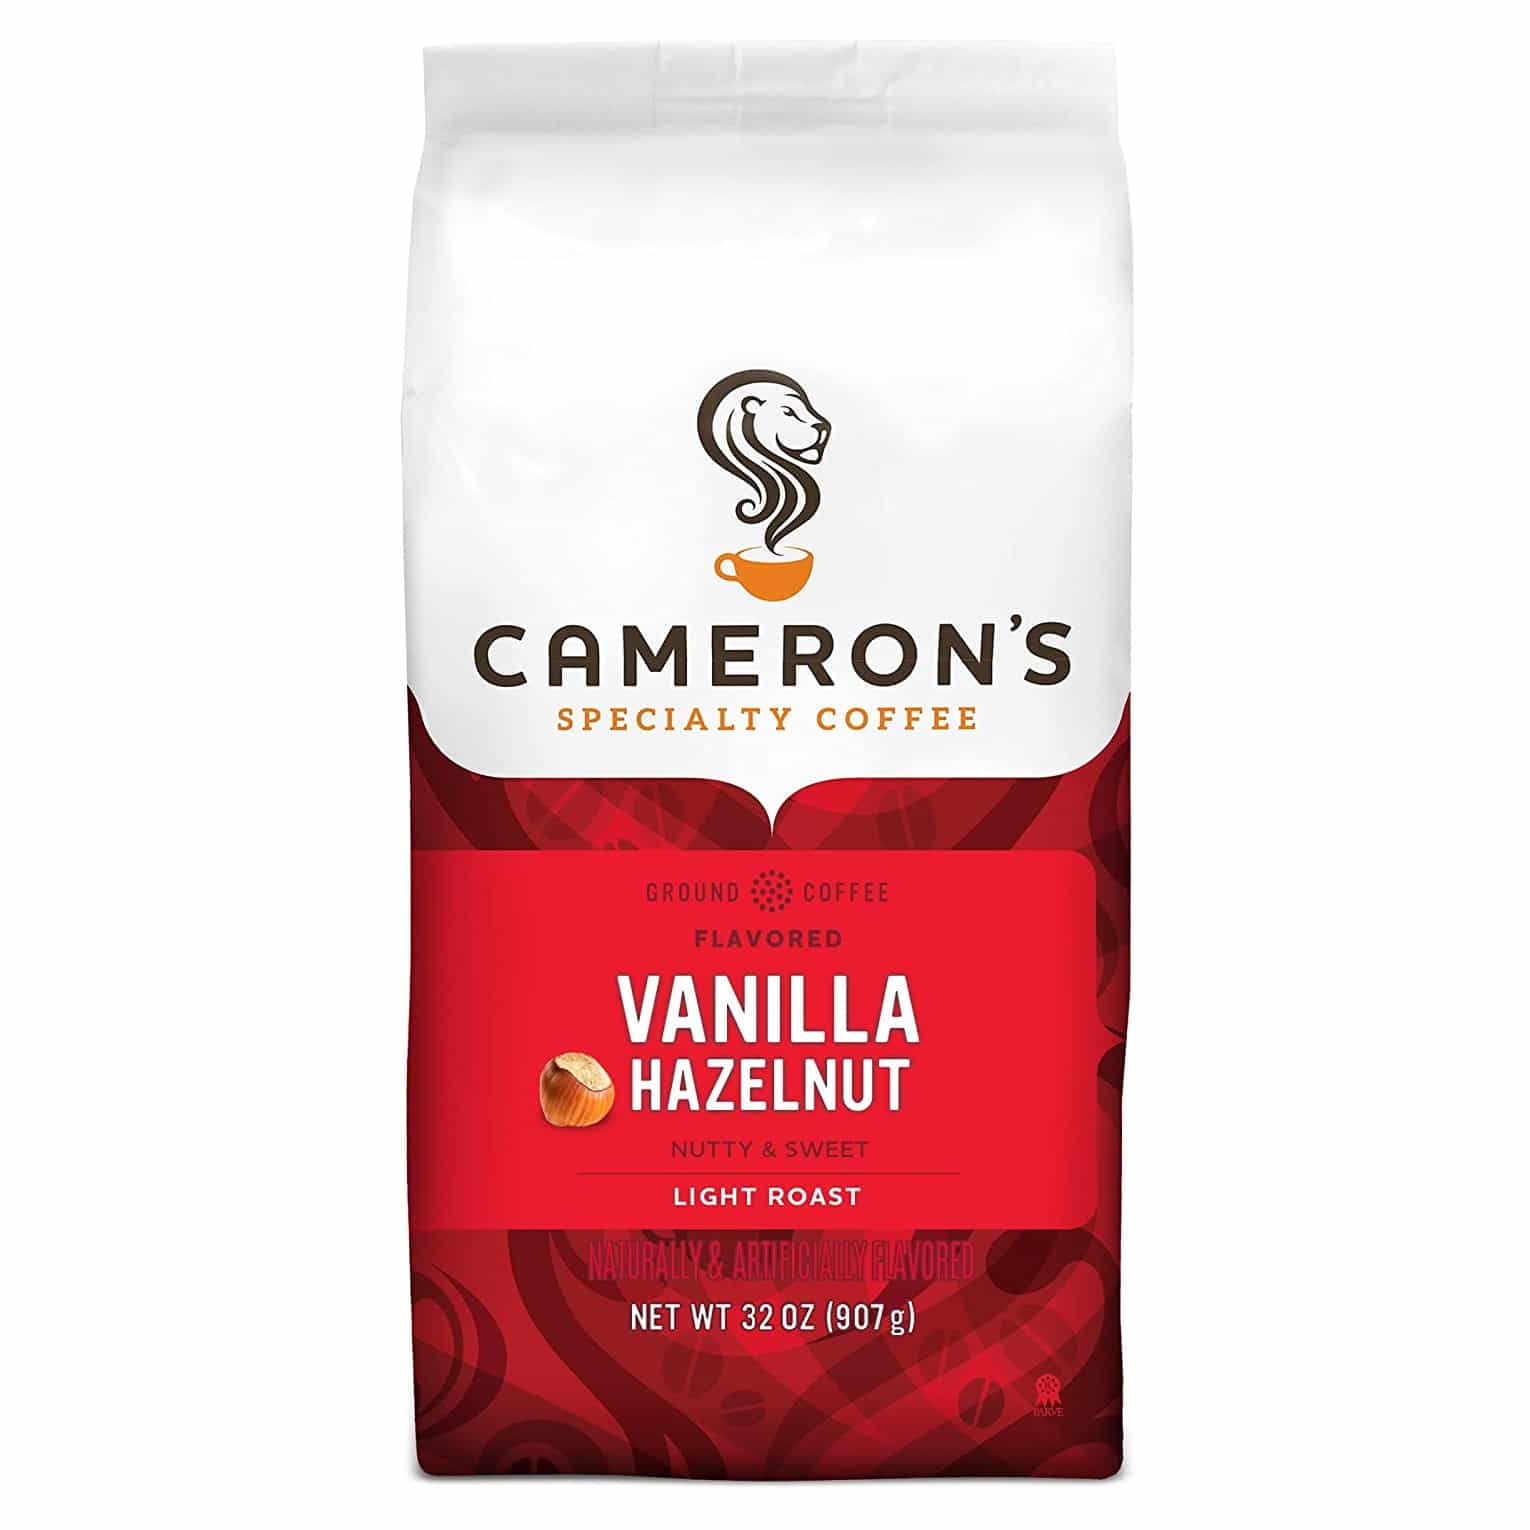 Cameron's Coffee Roasted Ground Coffee